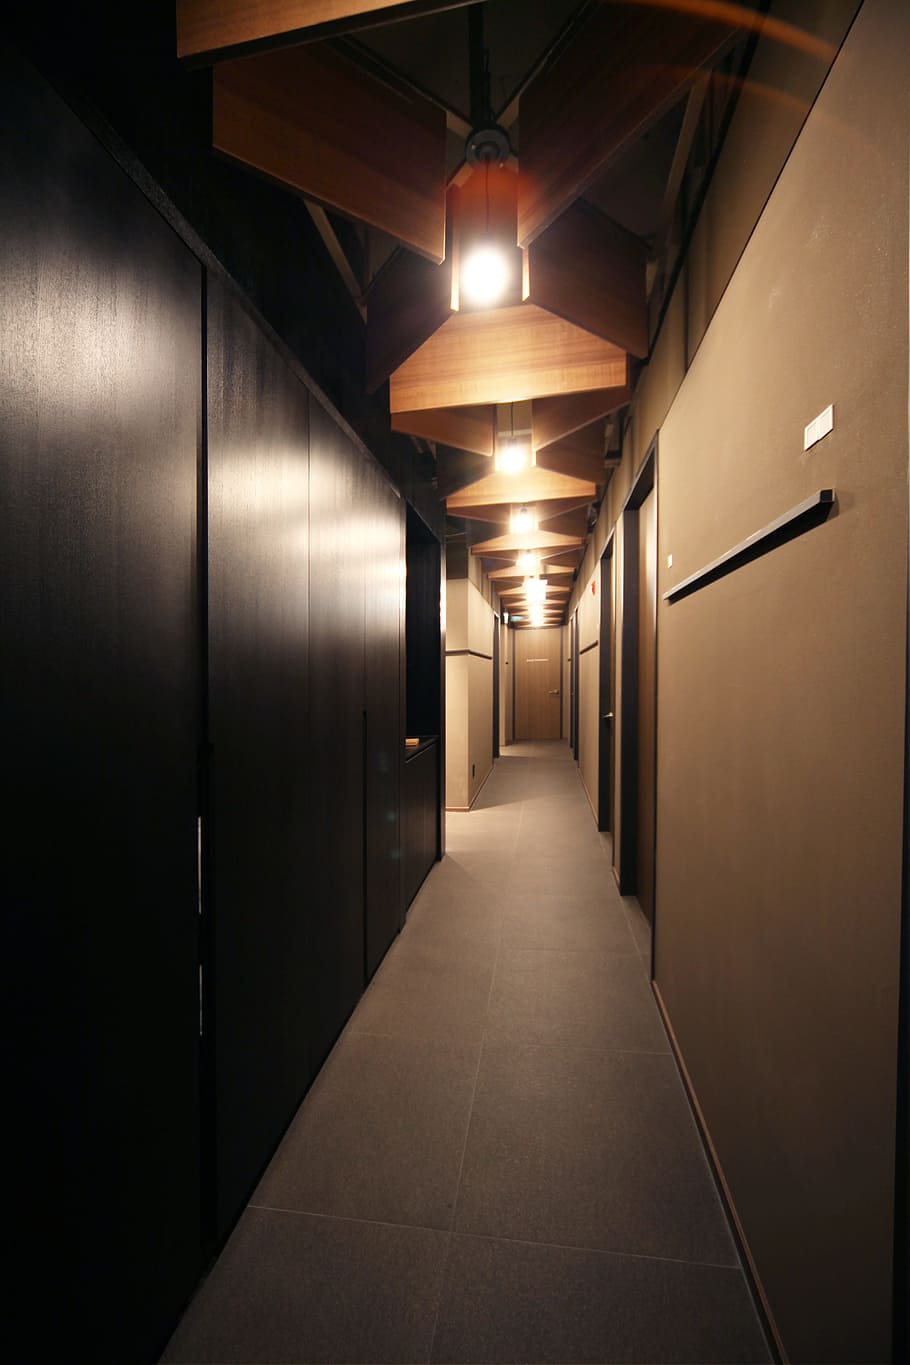 corridor, into exclusive, Corridor, Exclusive, into exclusive, hospital interior, illuminated, lighting equipment, indoors, cellar, storage room